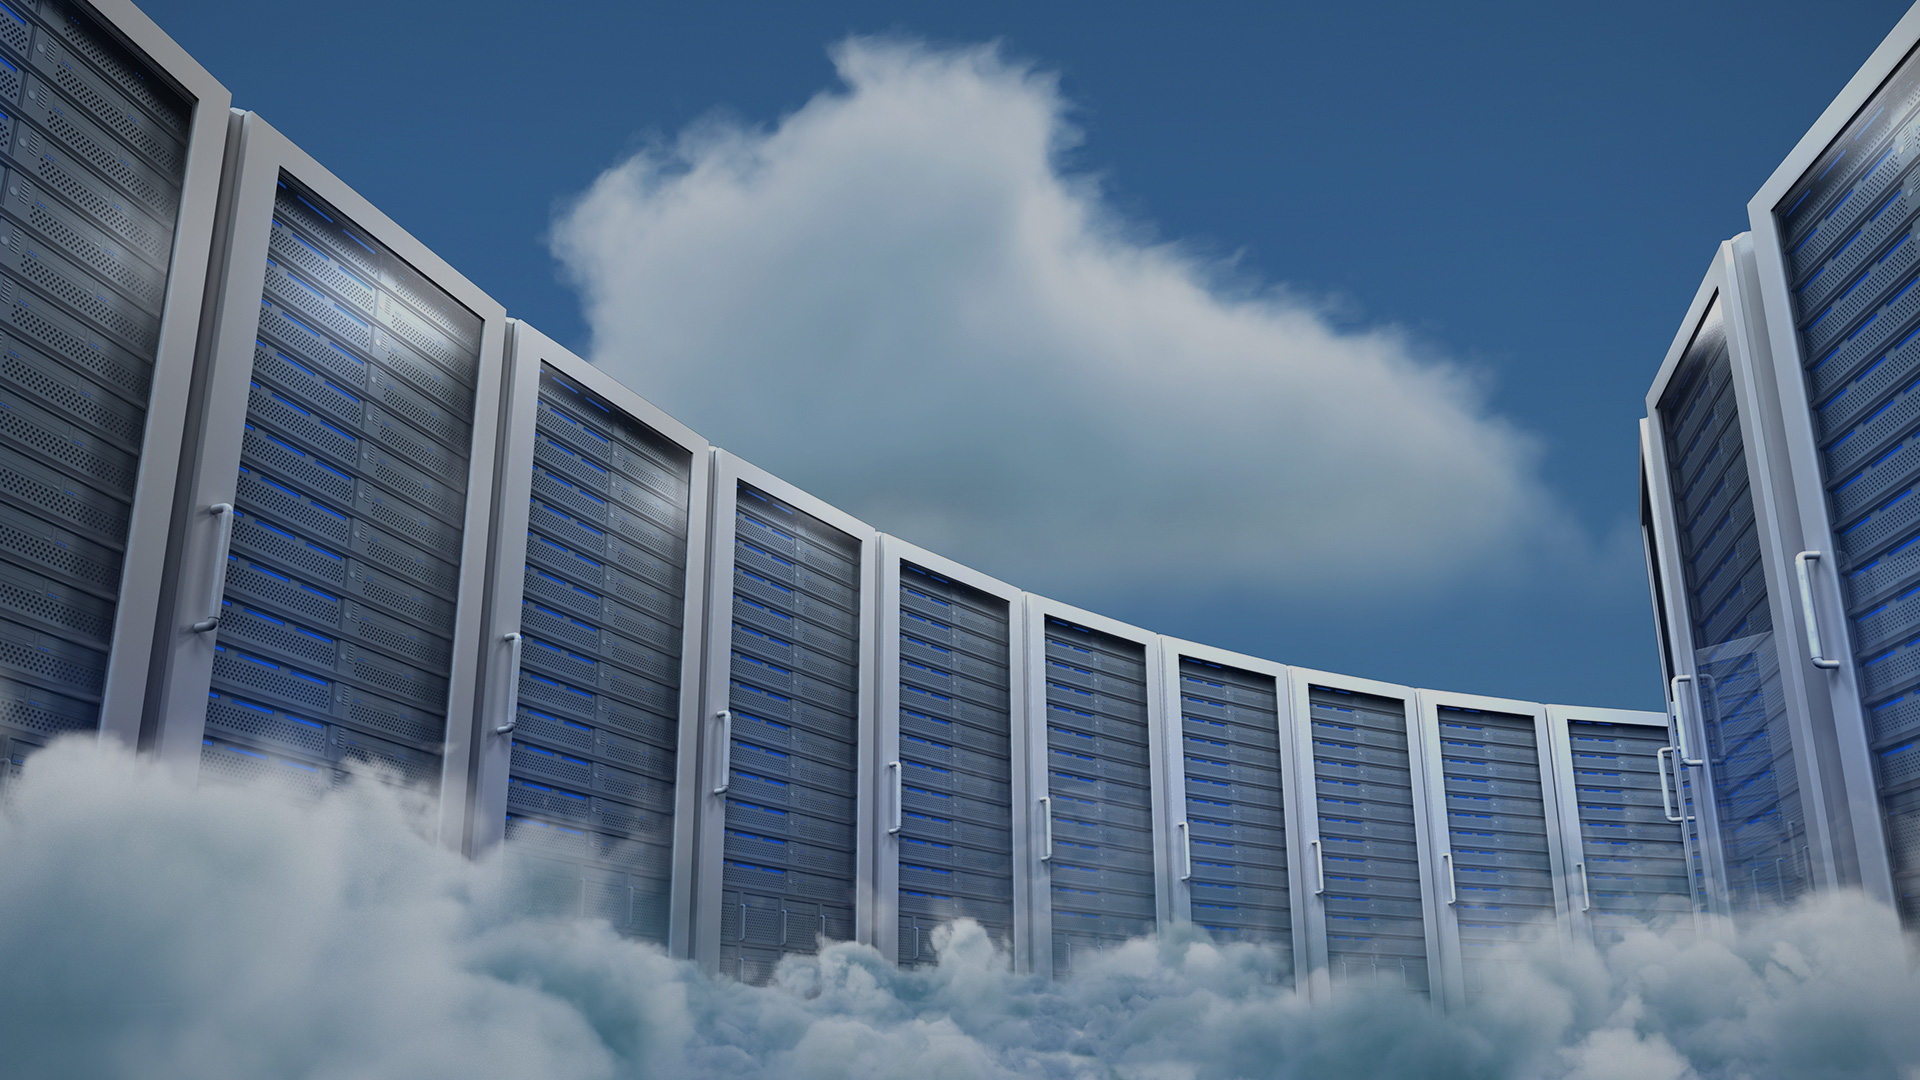 Hexaware’s Cloud EDMA (Enterprise Data Management and Analytics) Platform